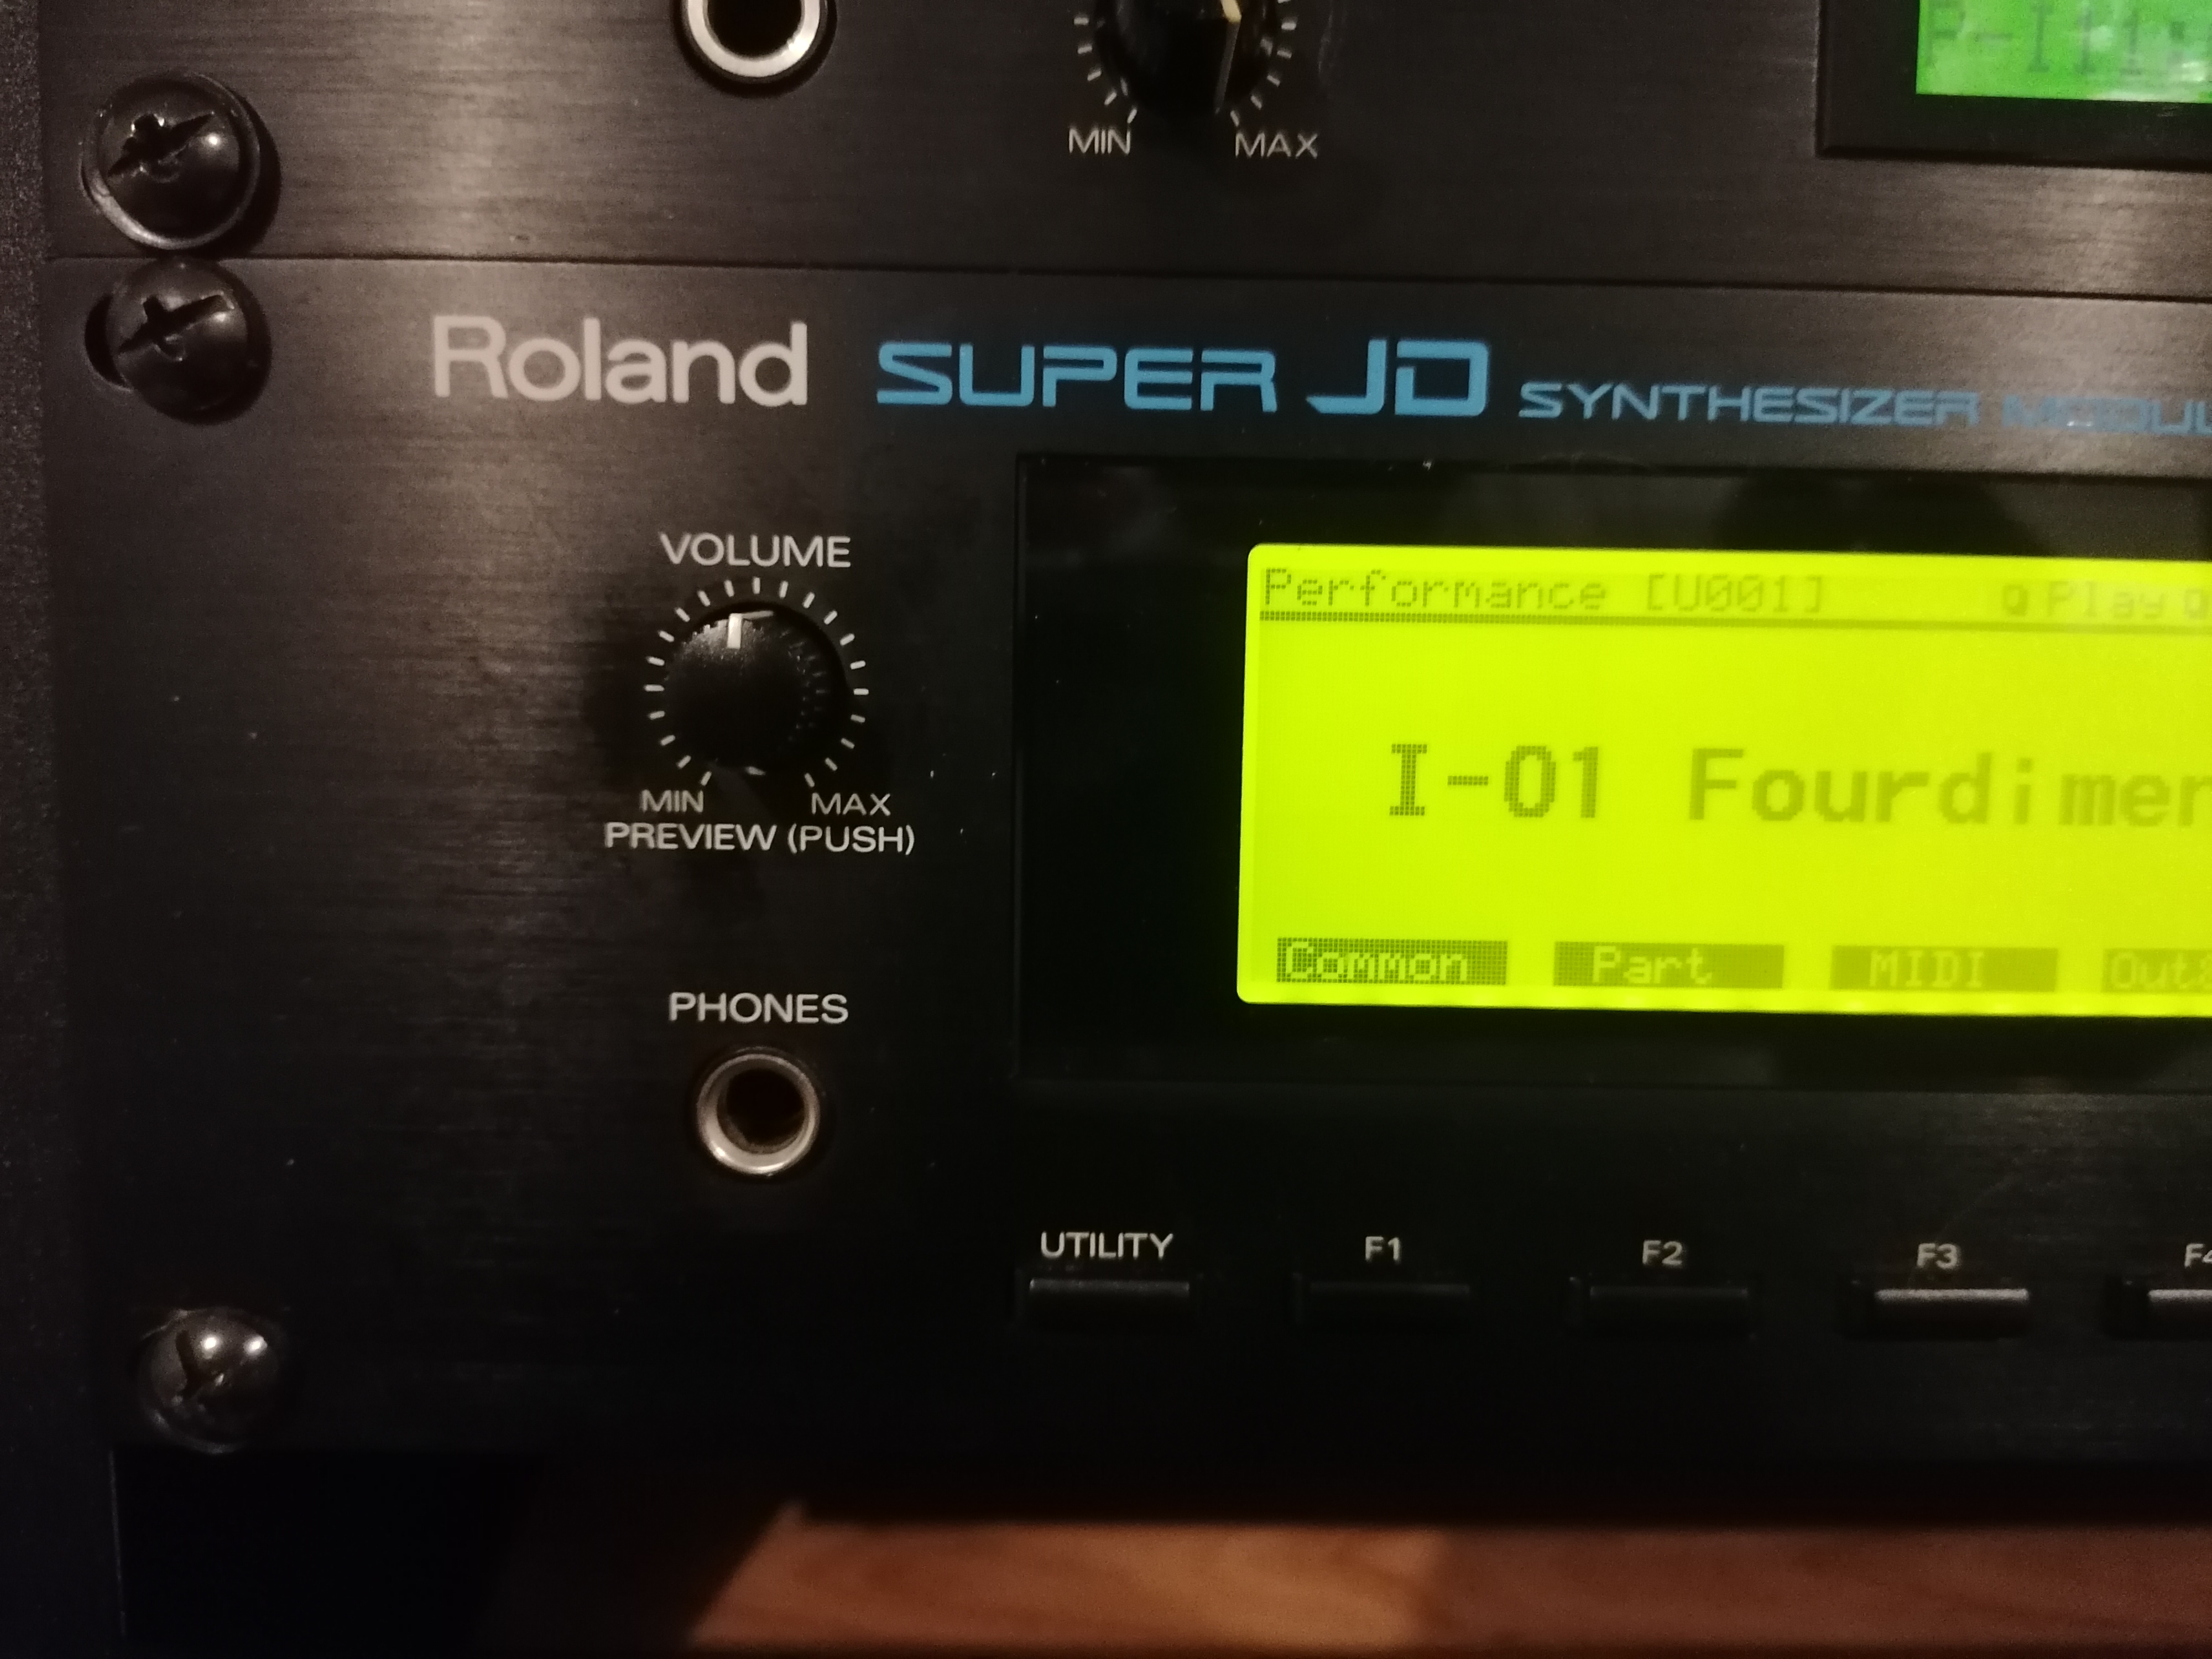 Jd 990 Superjd Roland Jd 990 Superjd Audiofanzine